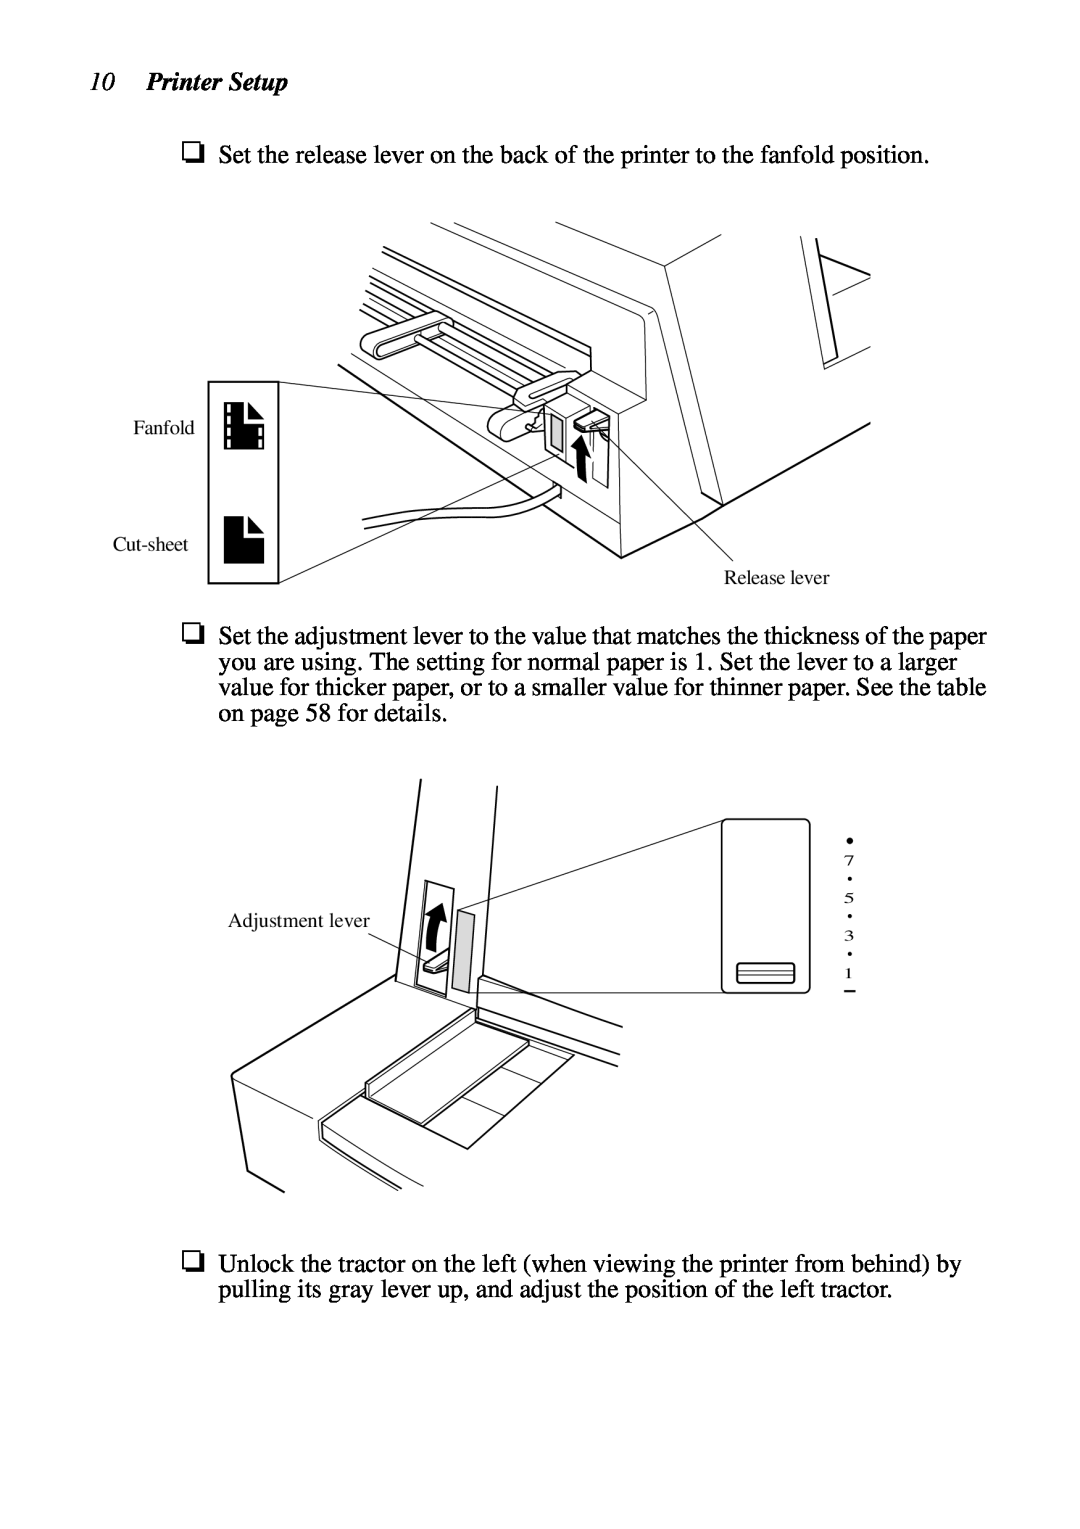 Star Micronics LC-7211 user manual Printer Setup, Fanfold Cut-sheet Release lever, Adjustment lever 